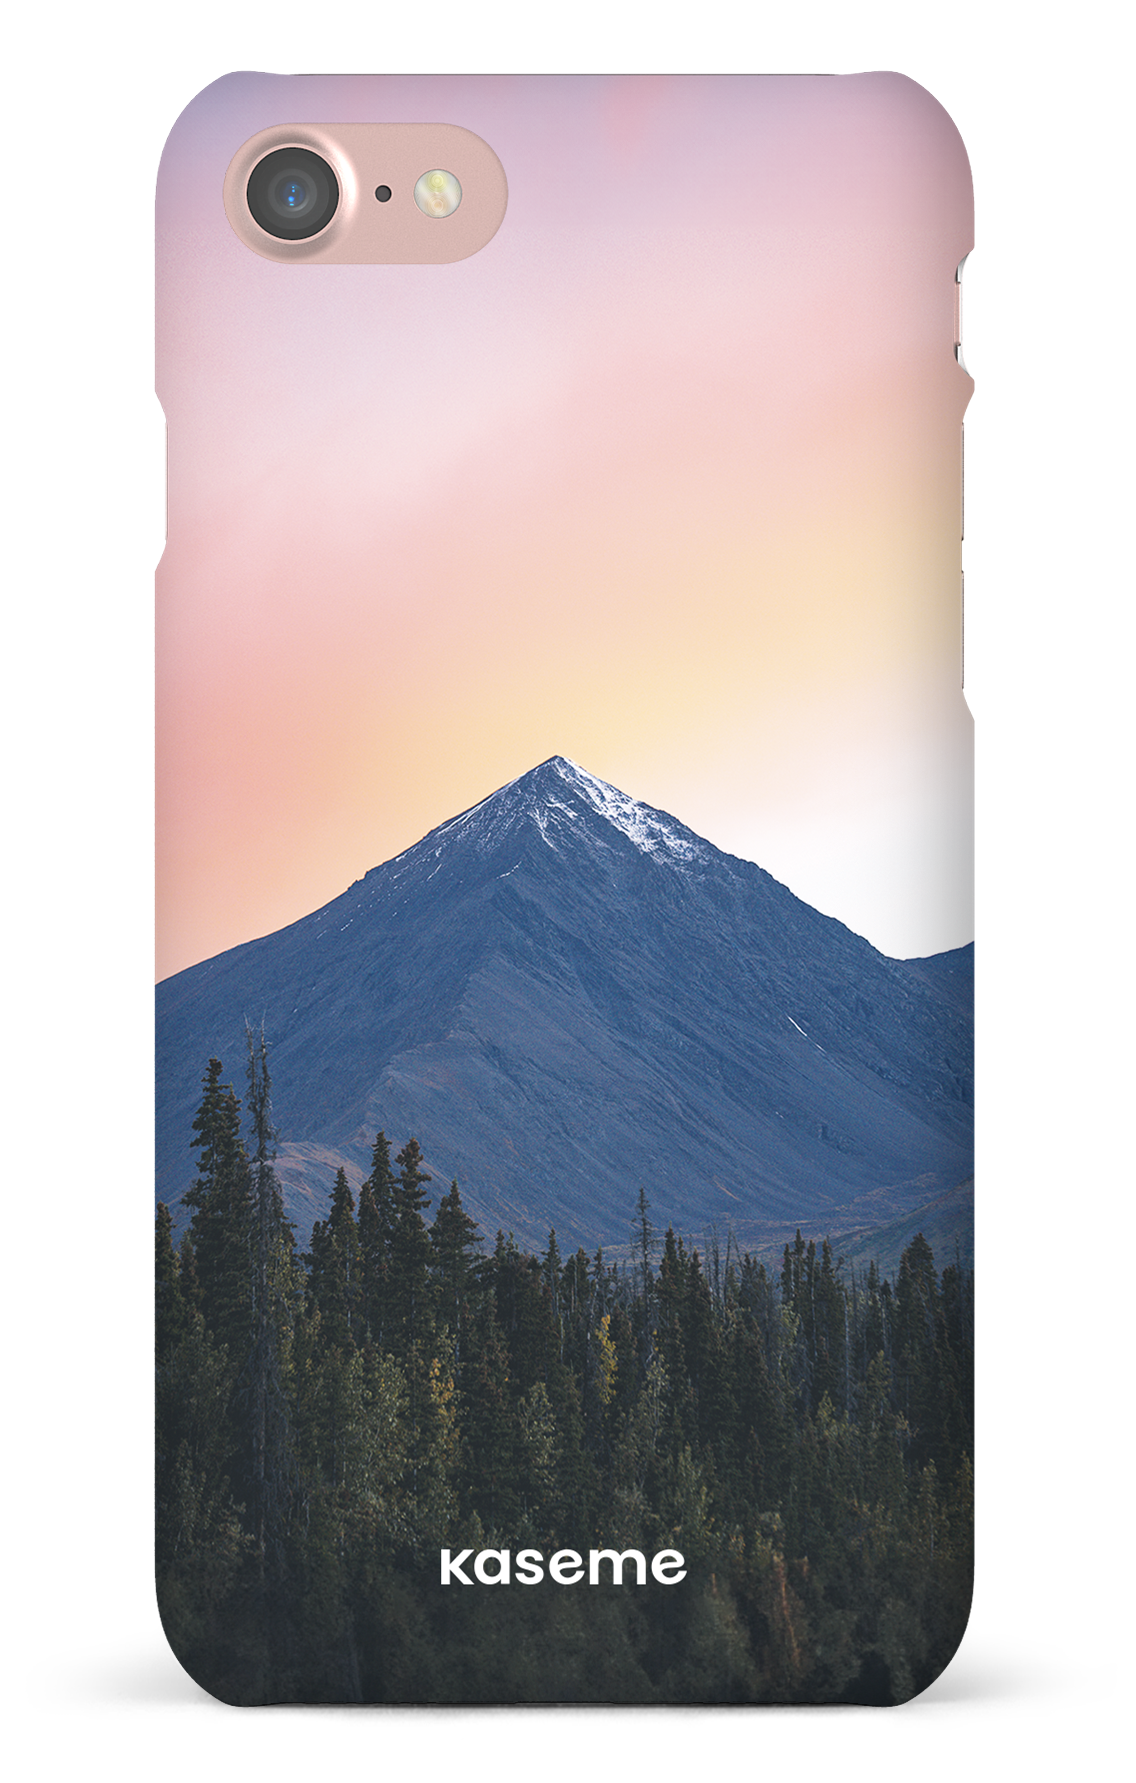 Pastel Peak by Yulneverroamalone - iPhone 7